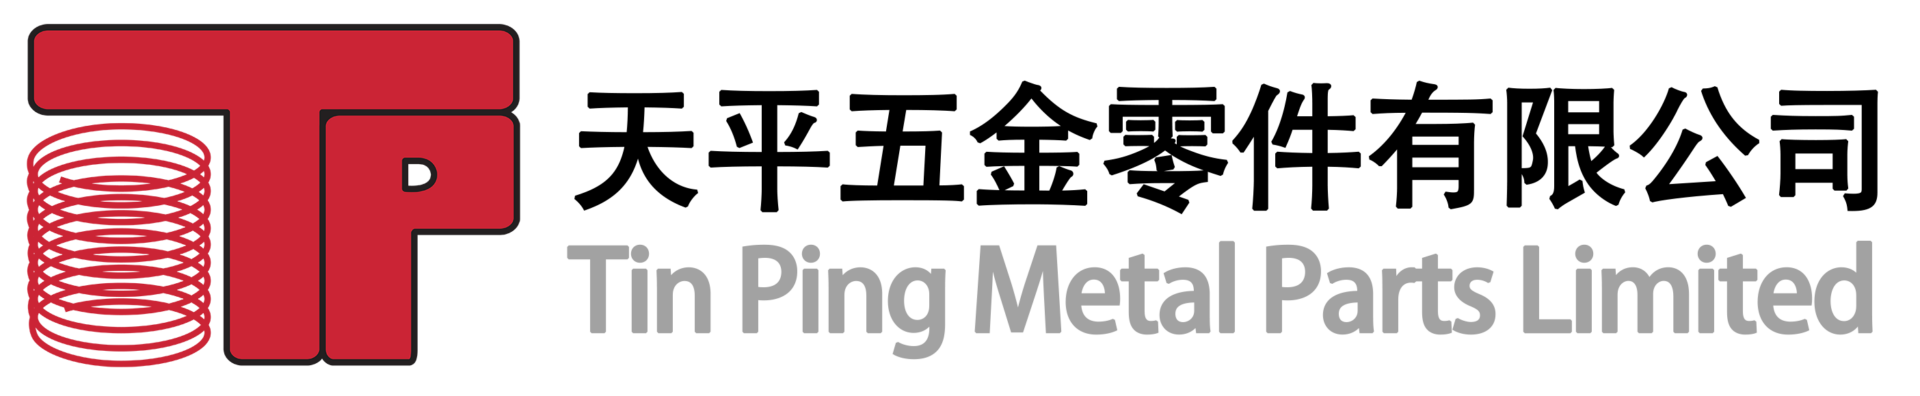 Tin Ping Metal Parts Limited